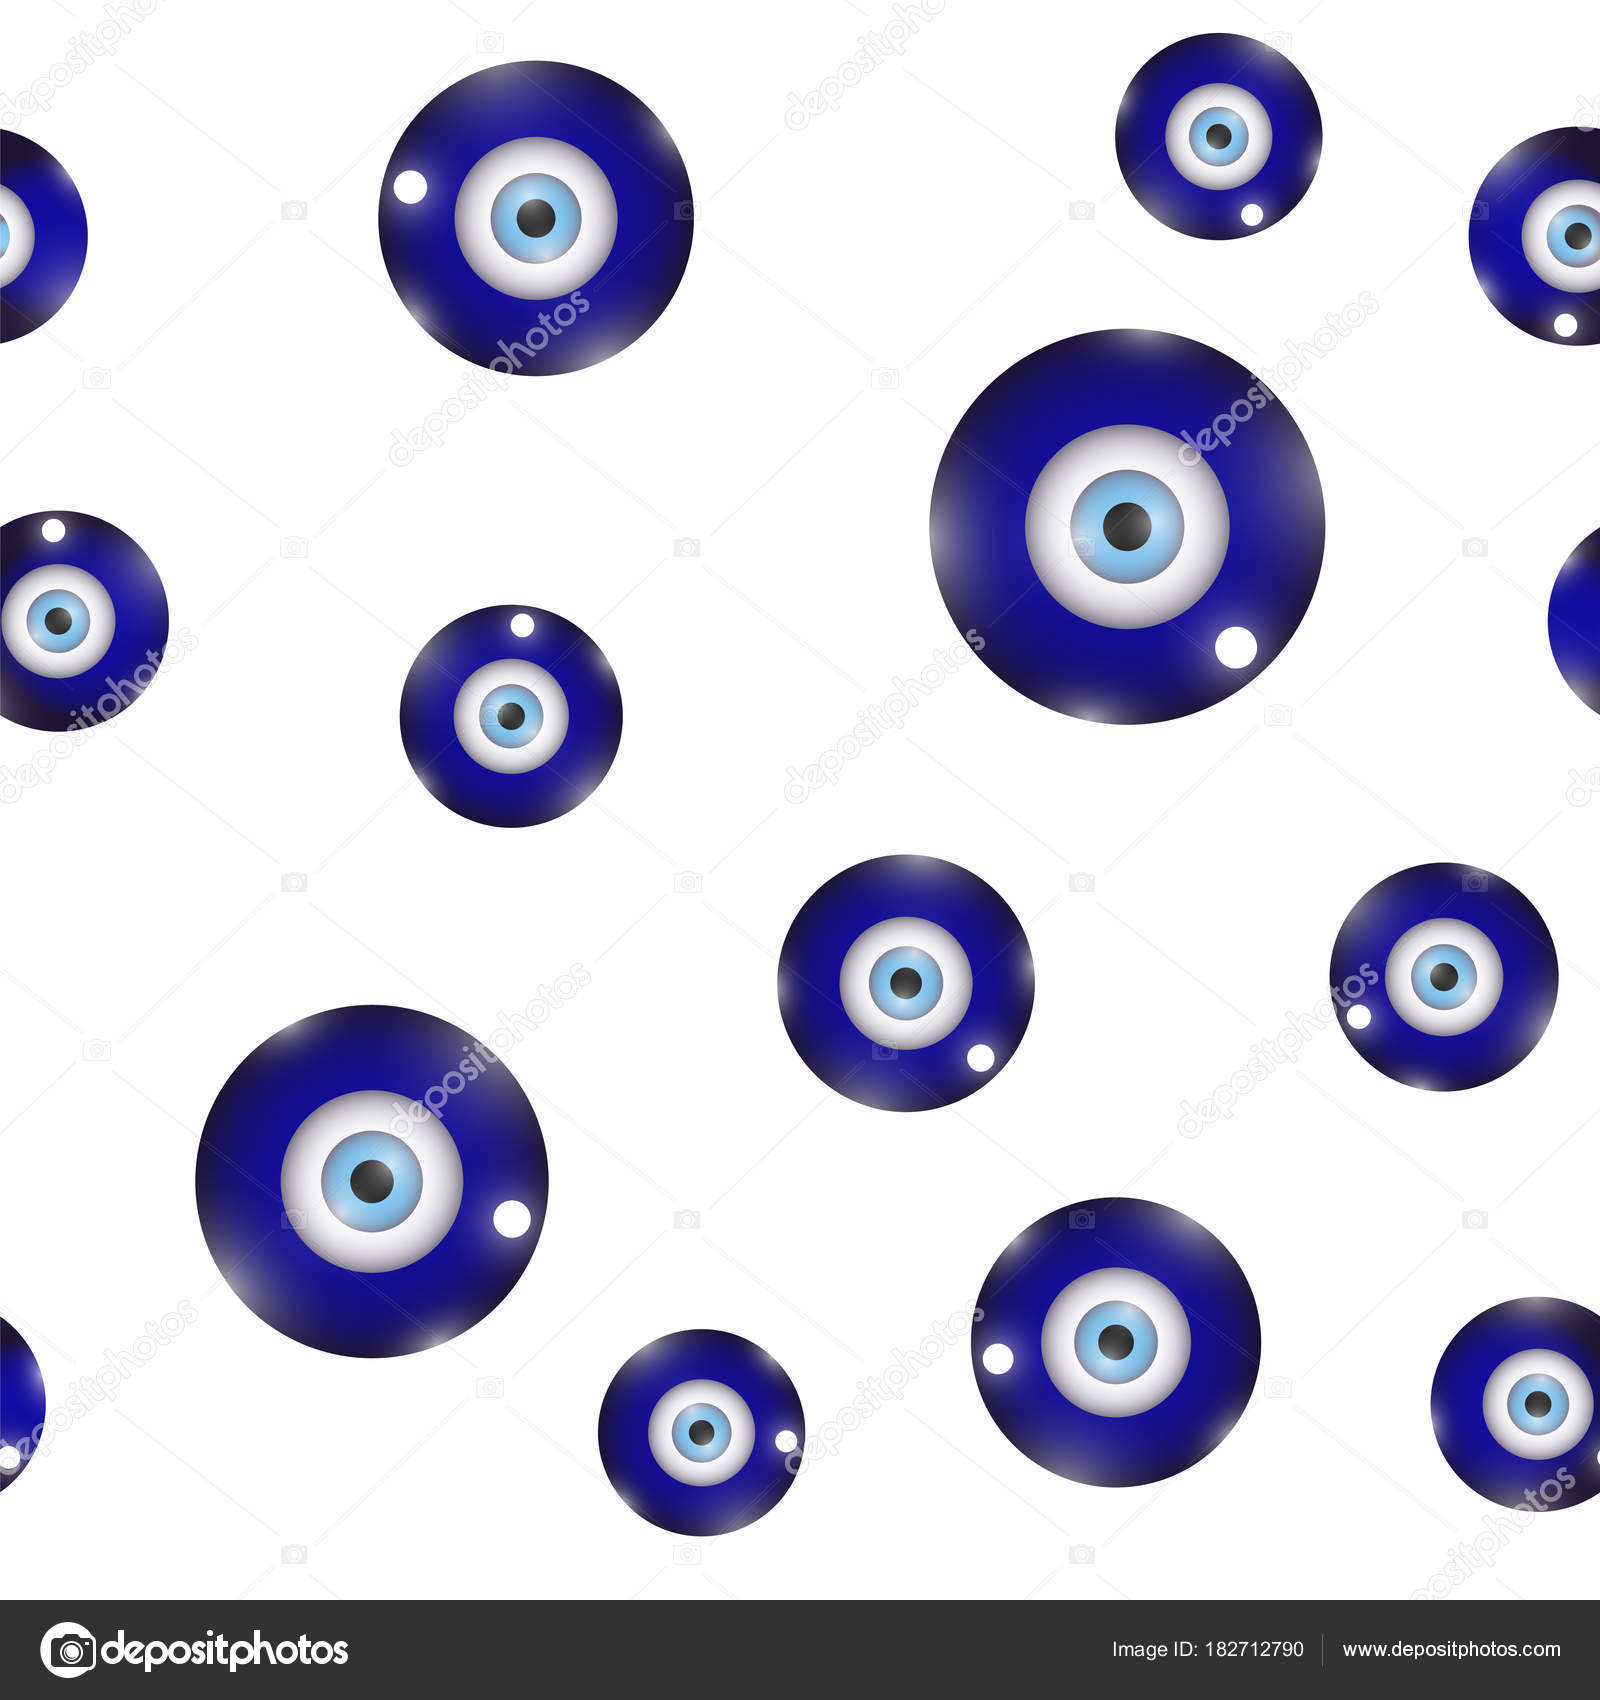 Glass Evil Eye Symbol Seamless Pattern on White Background